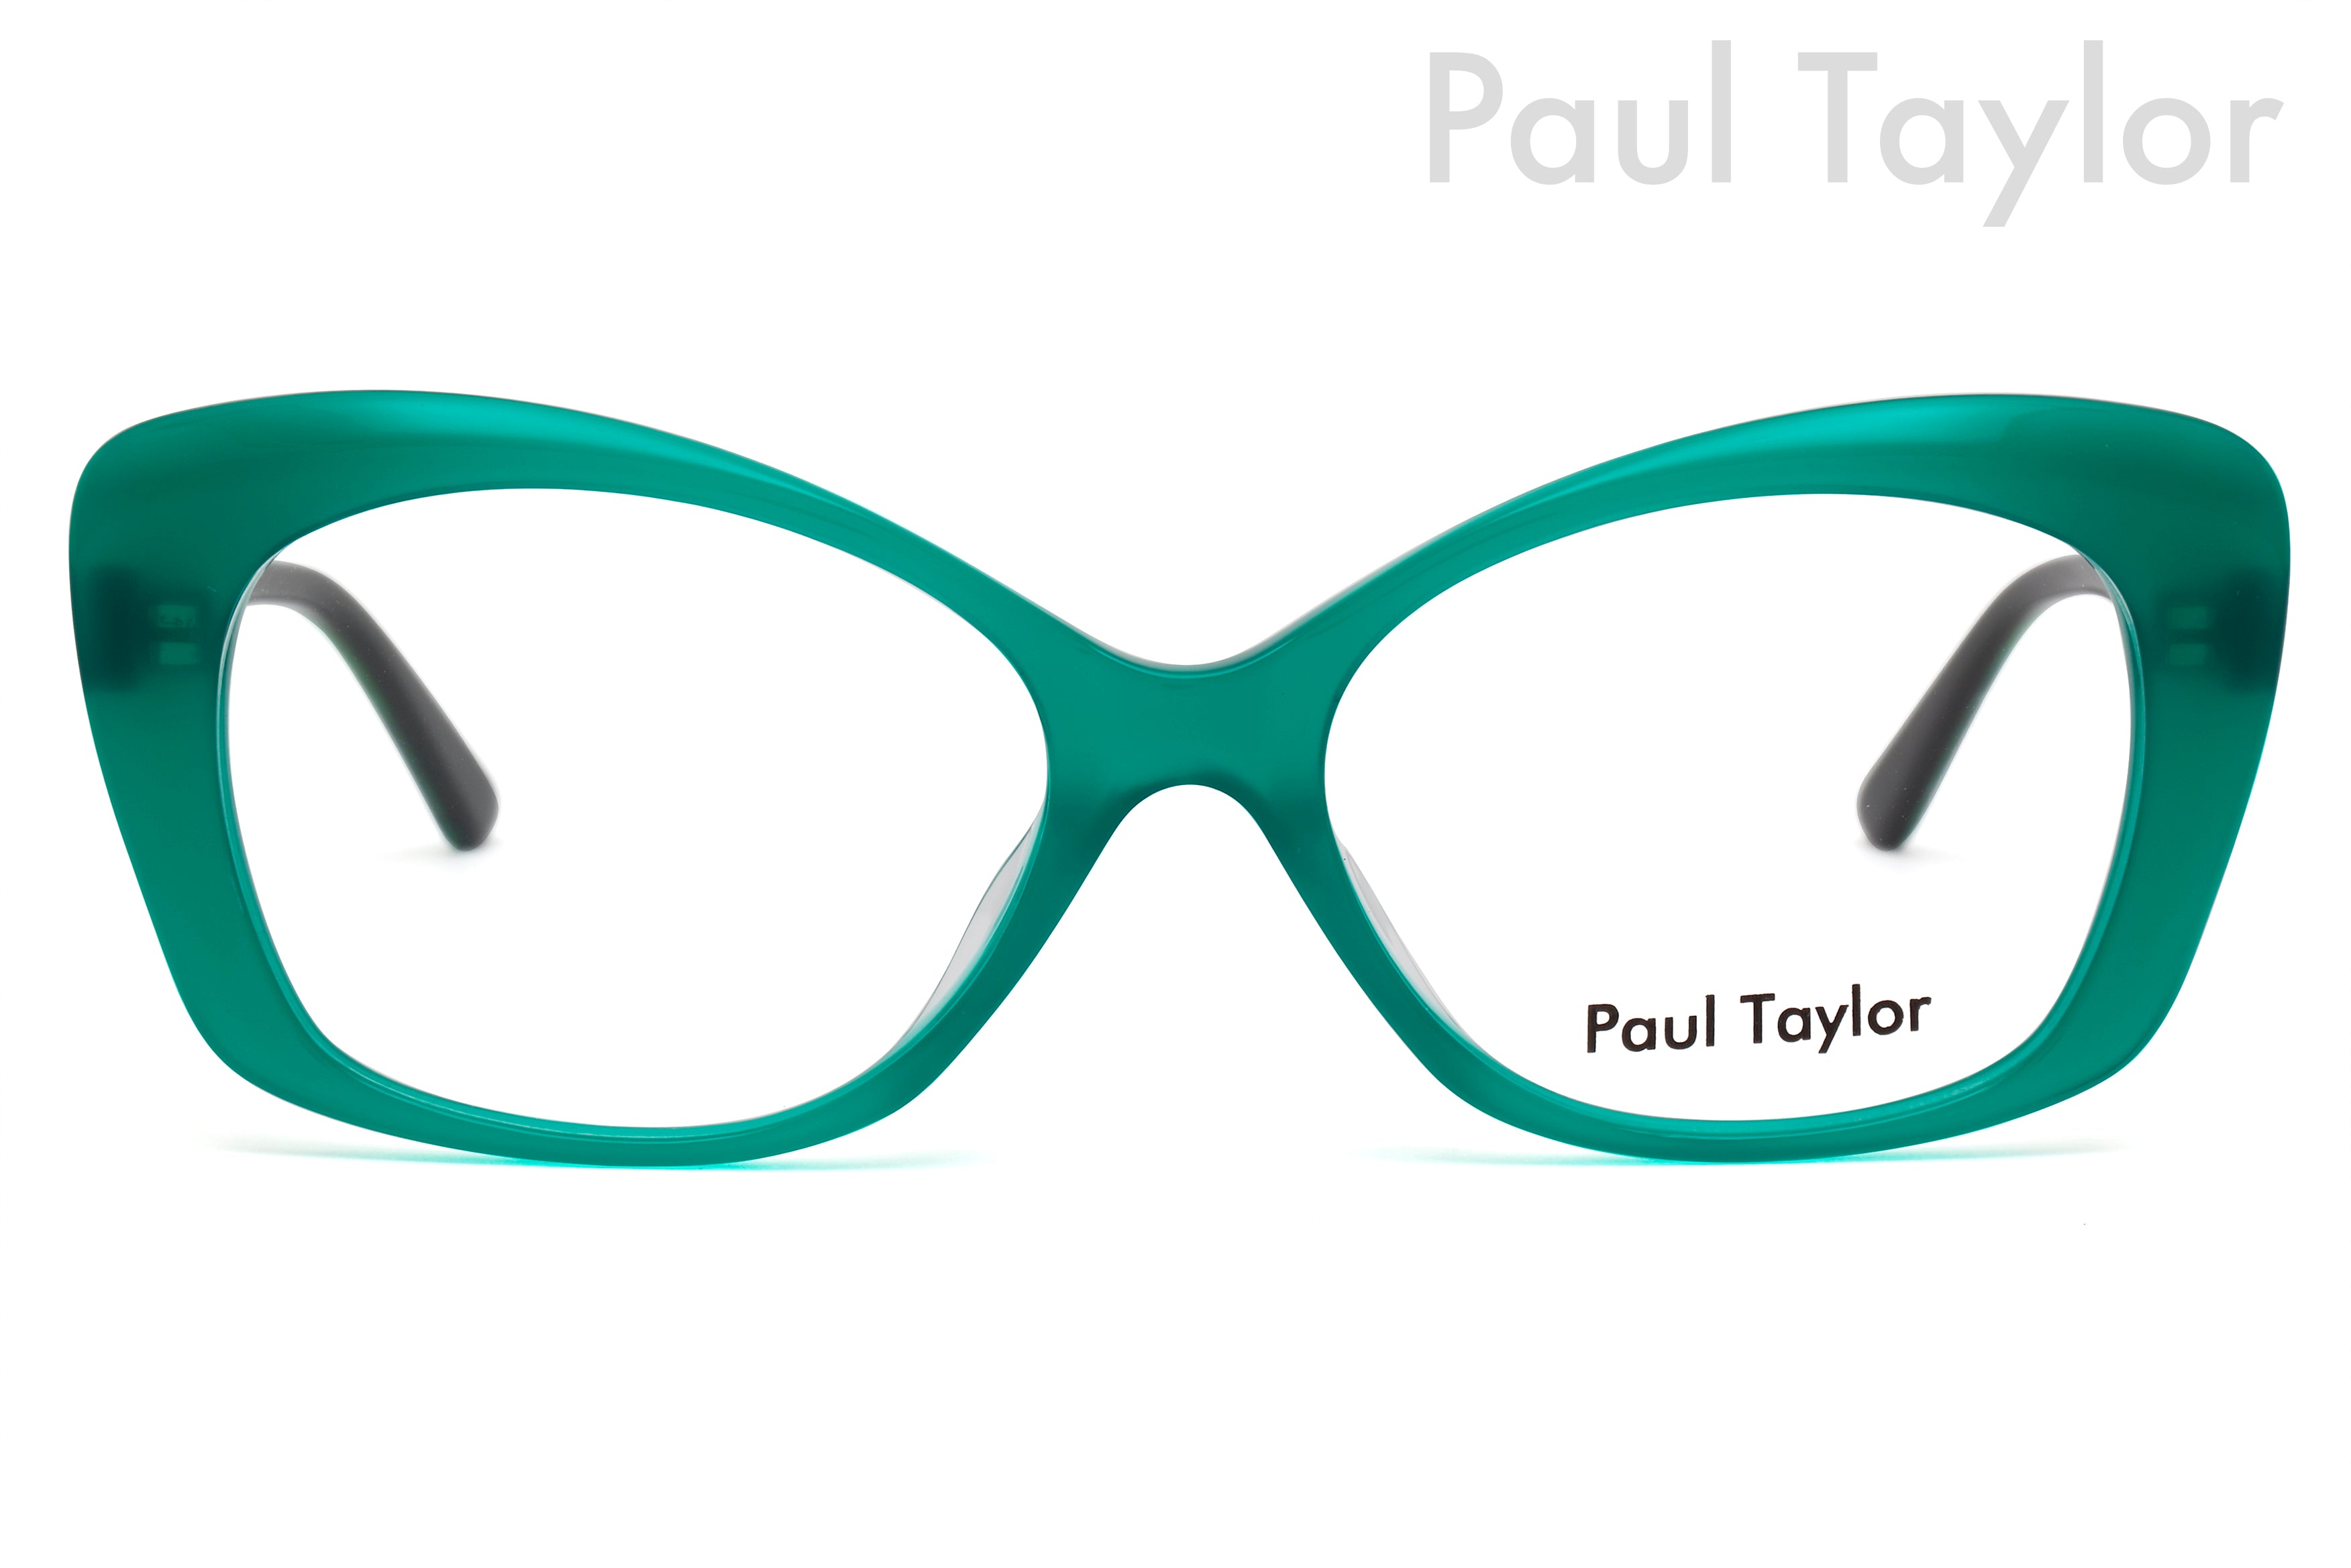 Twizel Optical Glasses Frames - Paul Taylor Eyewear 